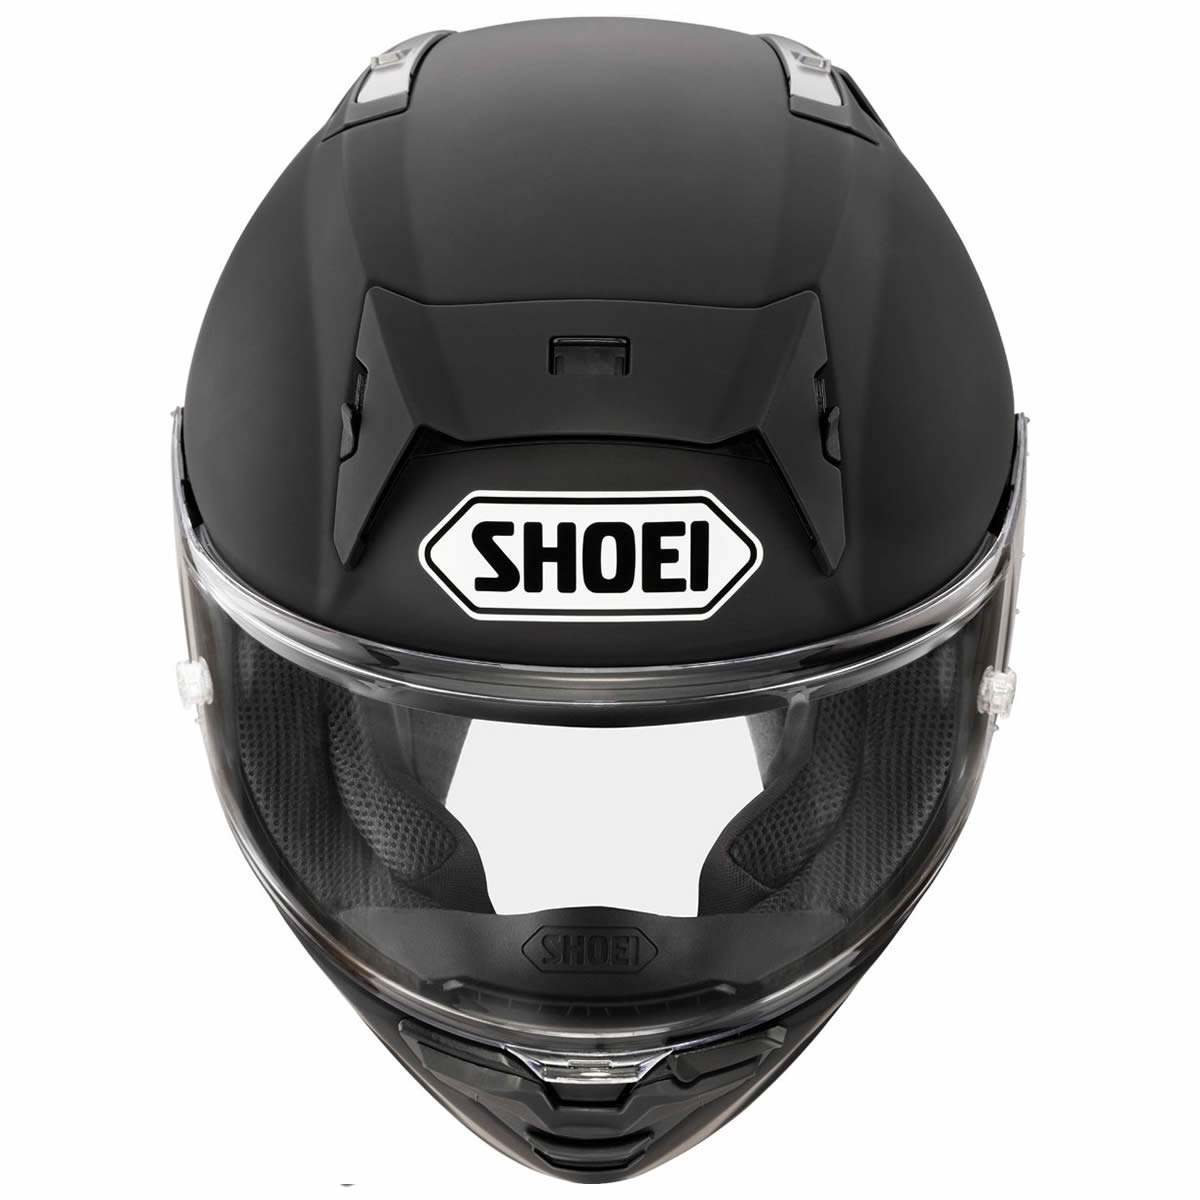 Shoei Helm X-SPR PRO, schwarz matt